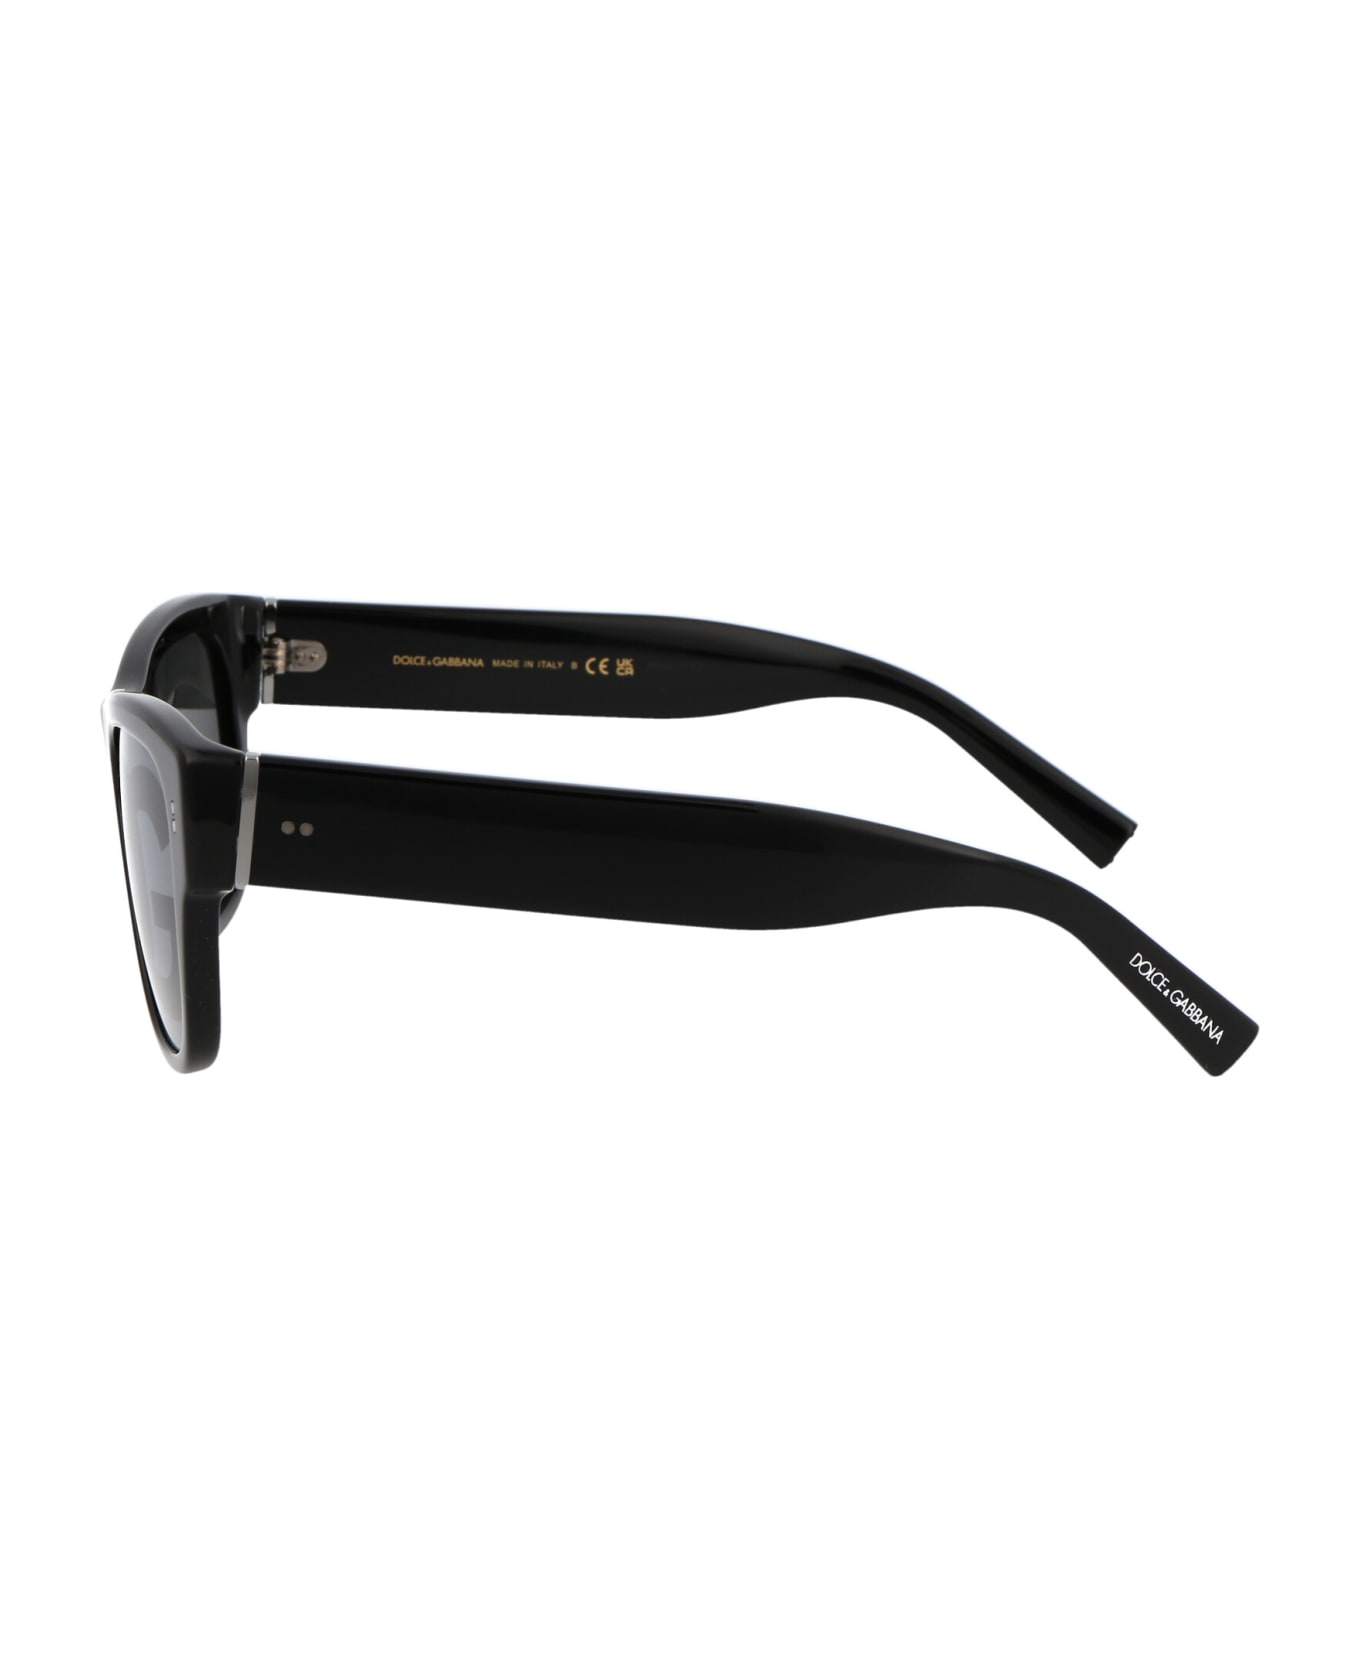 Dolce & Gabbana Eyewear 0dg4338 Sunglasses - 501/M BLACK サングラス